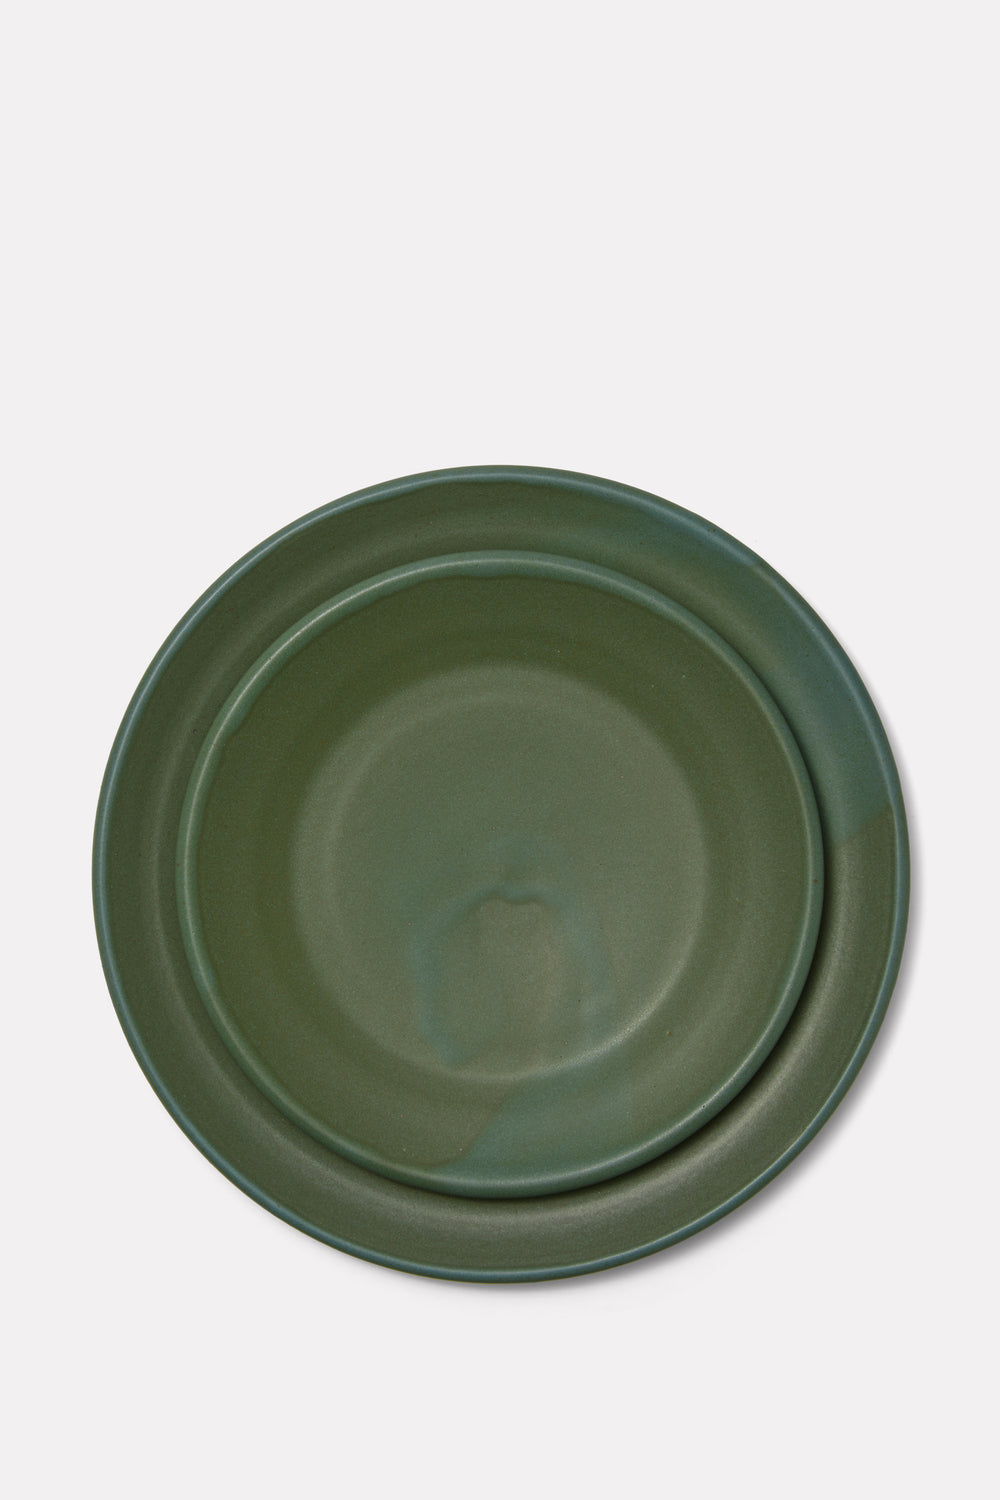 Hand-Thrown Ceramic Salad Plate